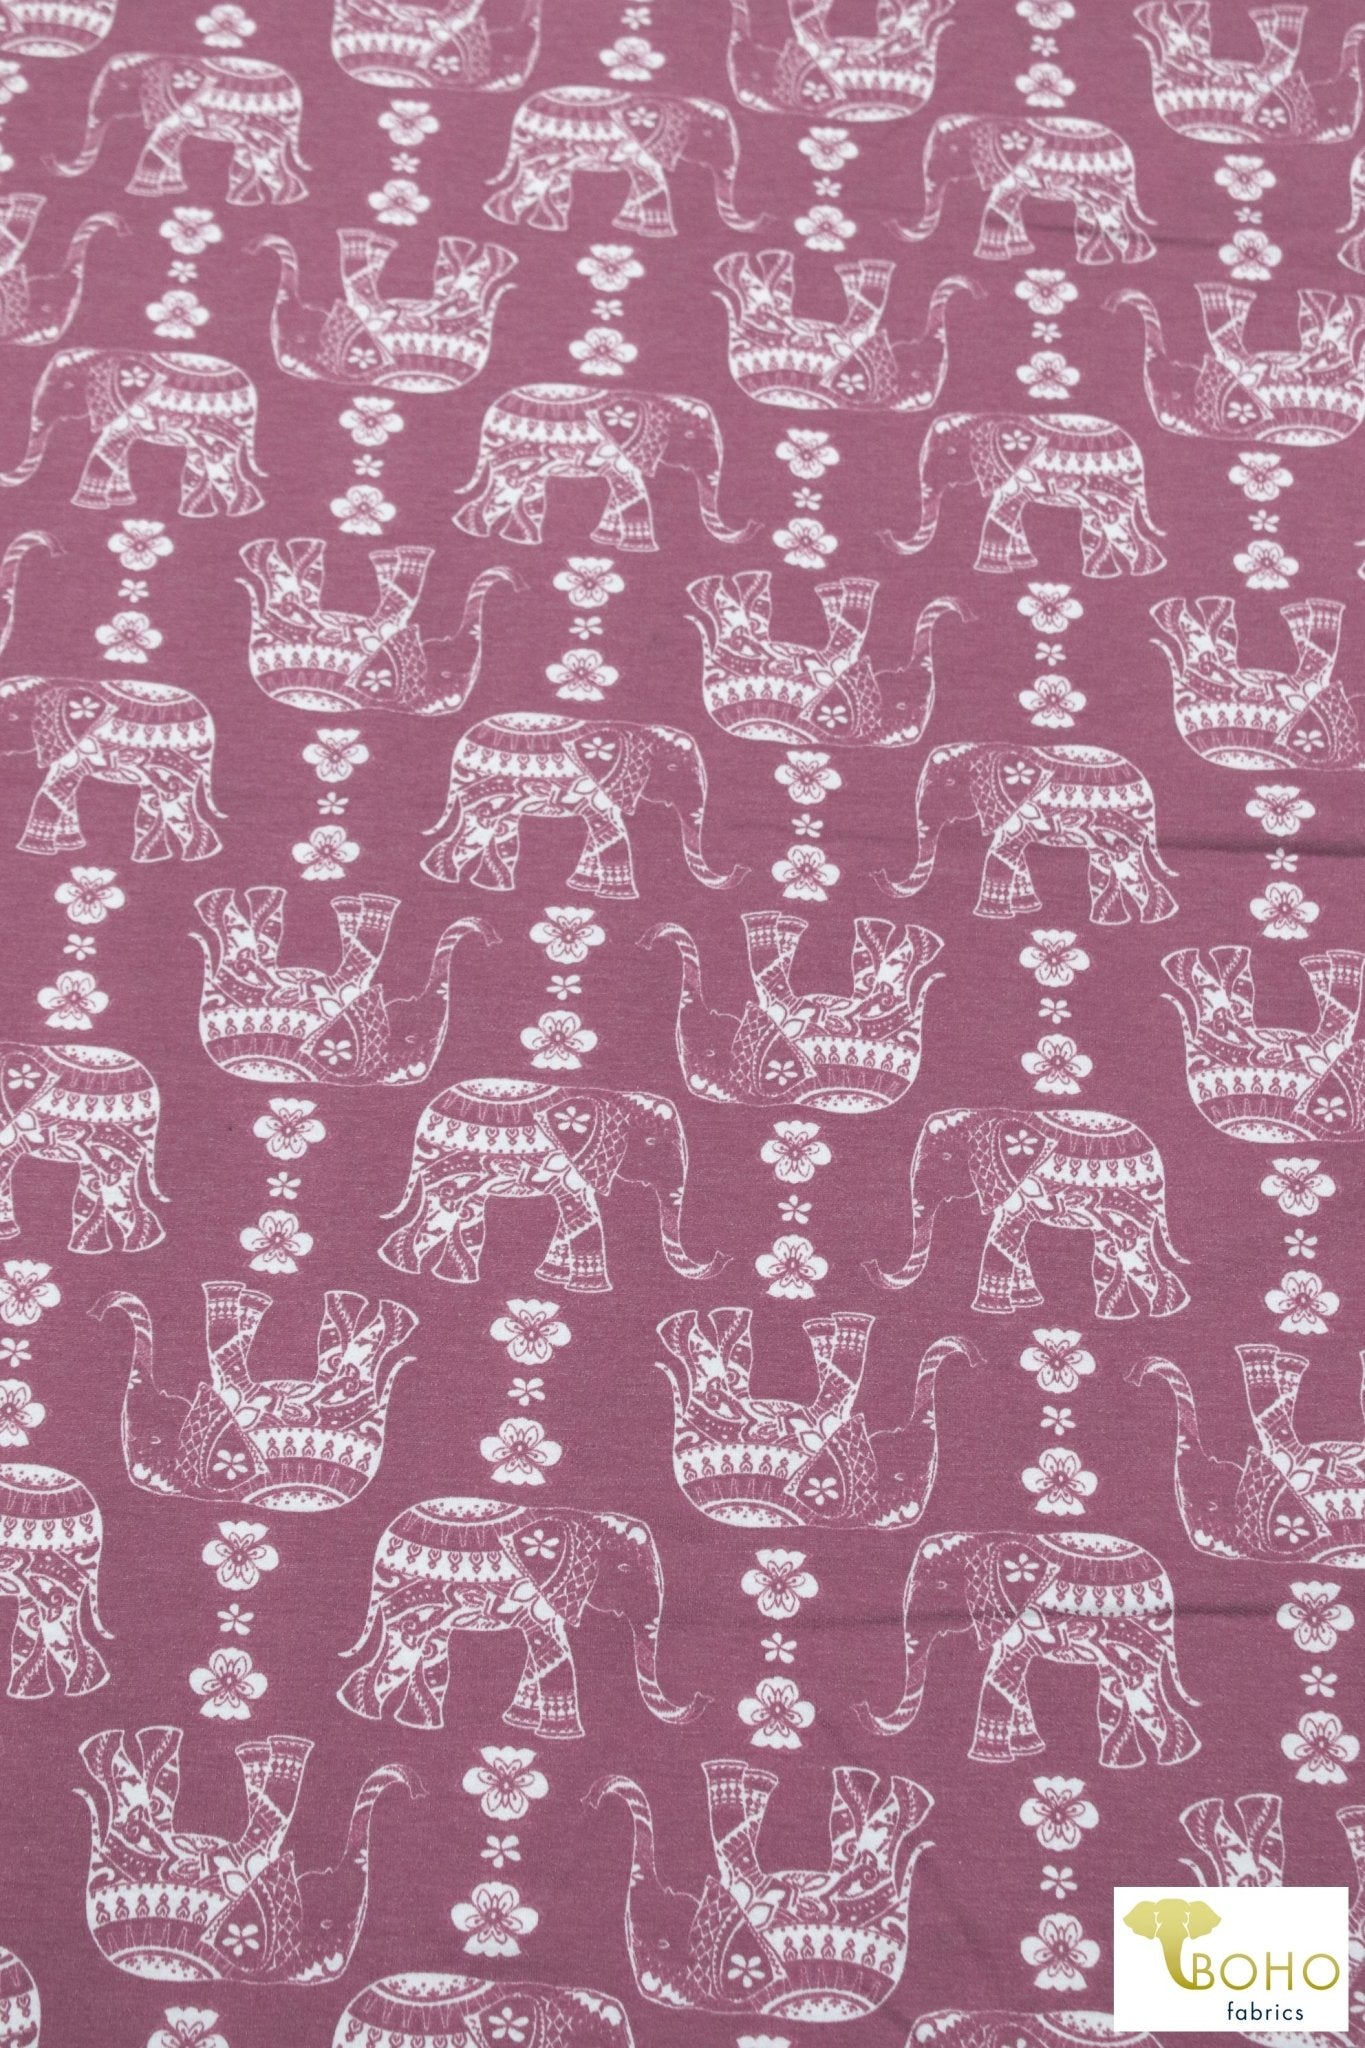 Elephant Parade on Dusty Raspberry, French Terry Knit Print. FTP-326-RASP - Boho Fabrics